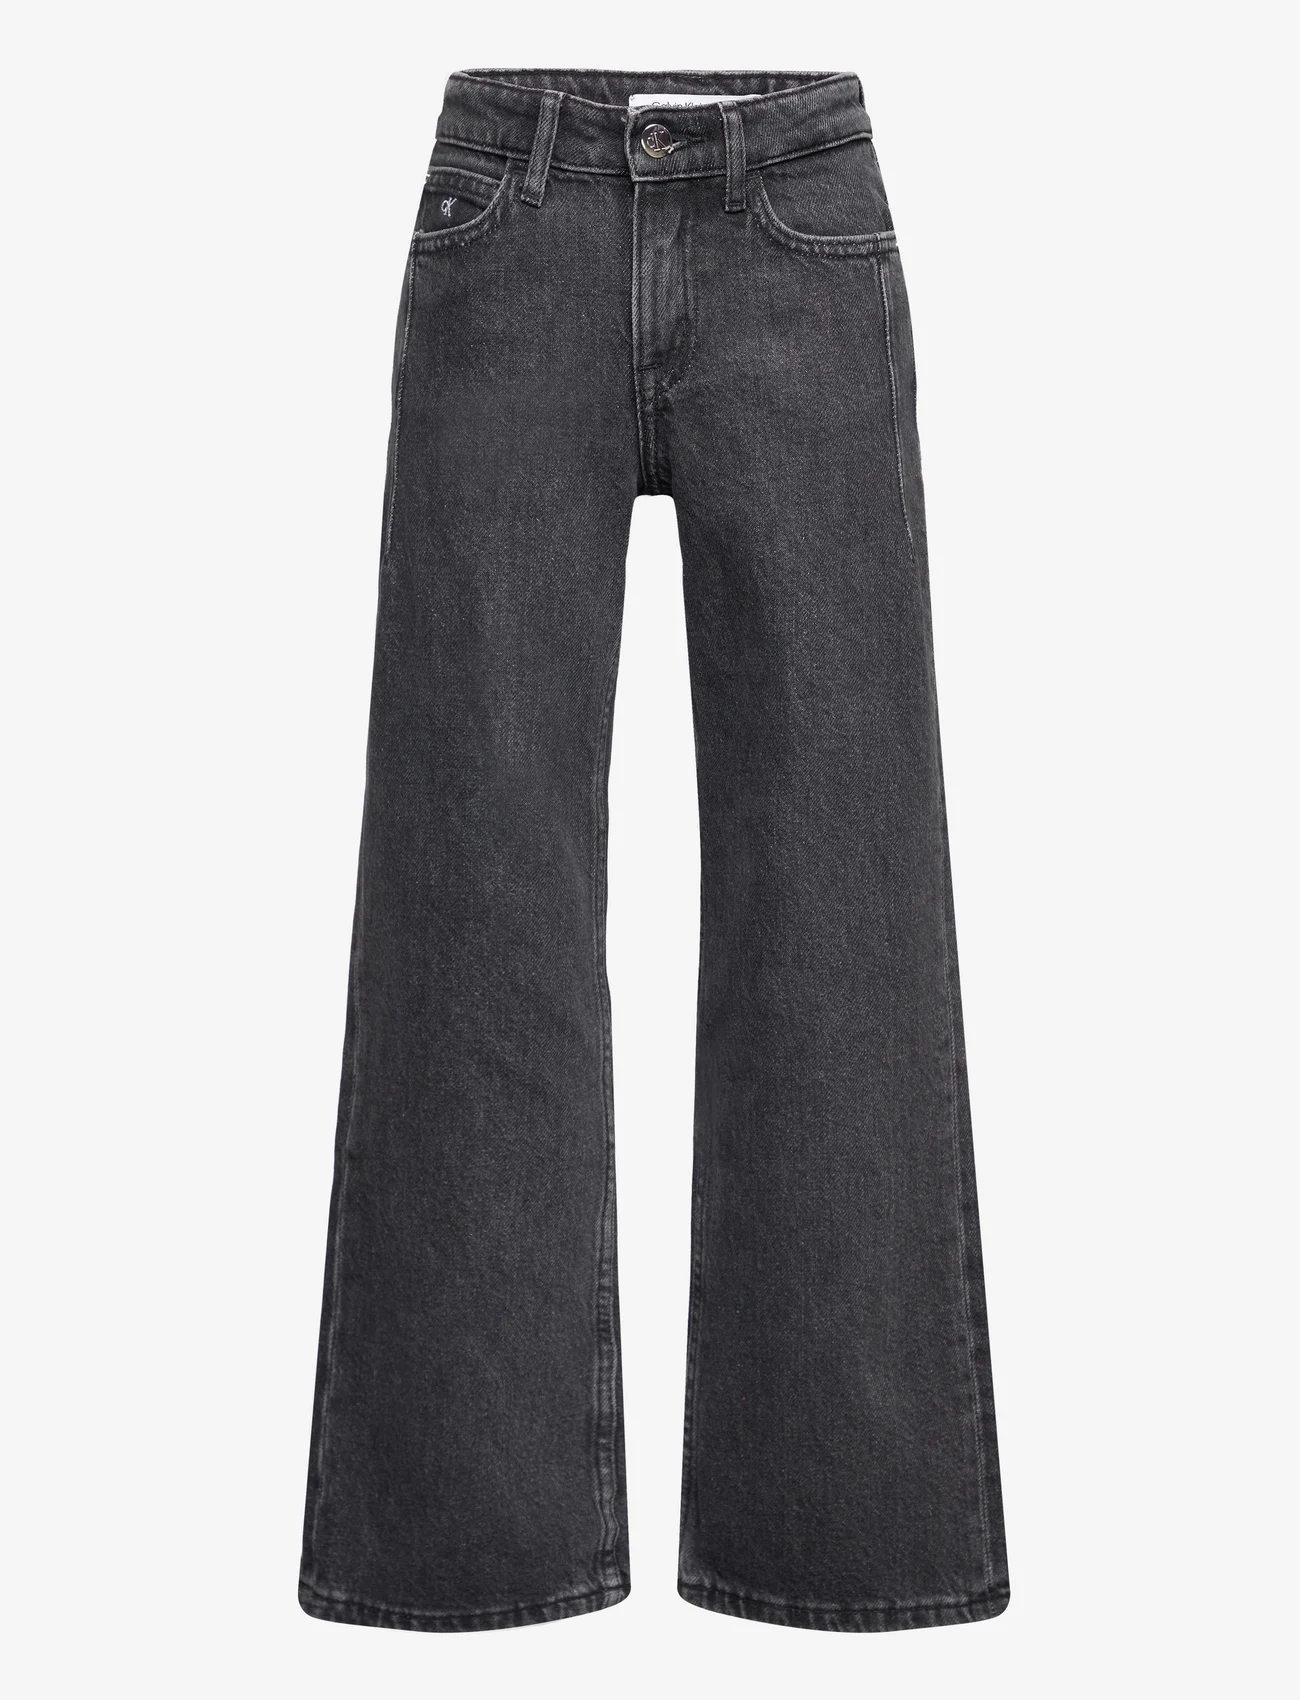 Calvin Klein - HR WIDE LEG OPTIC WASHED BLACK - wide jeans - optic washed black - 0